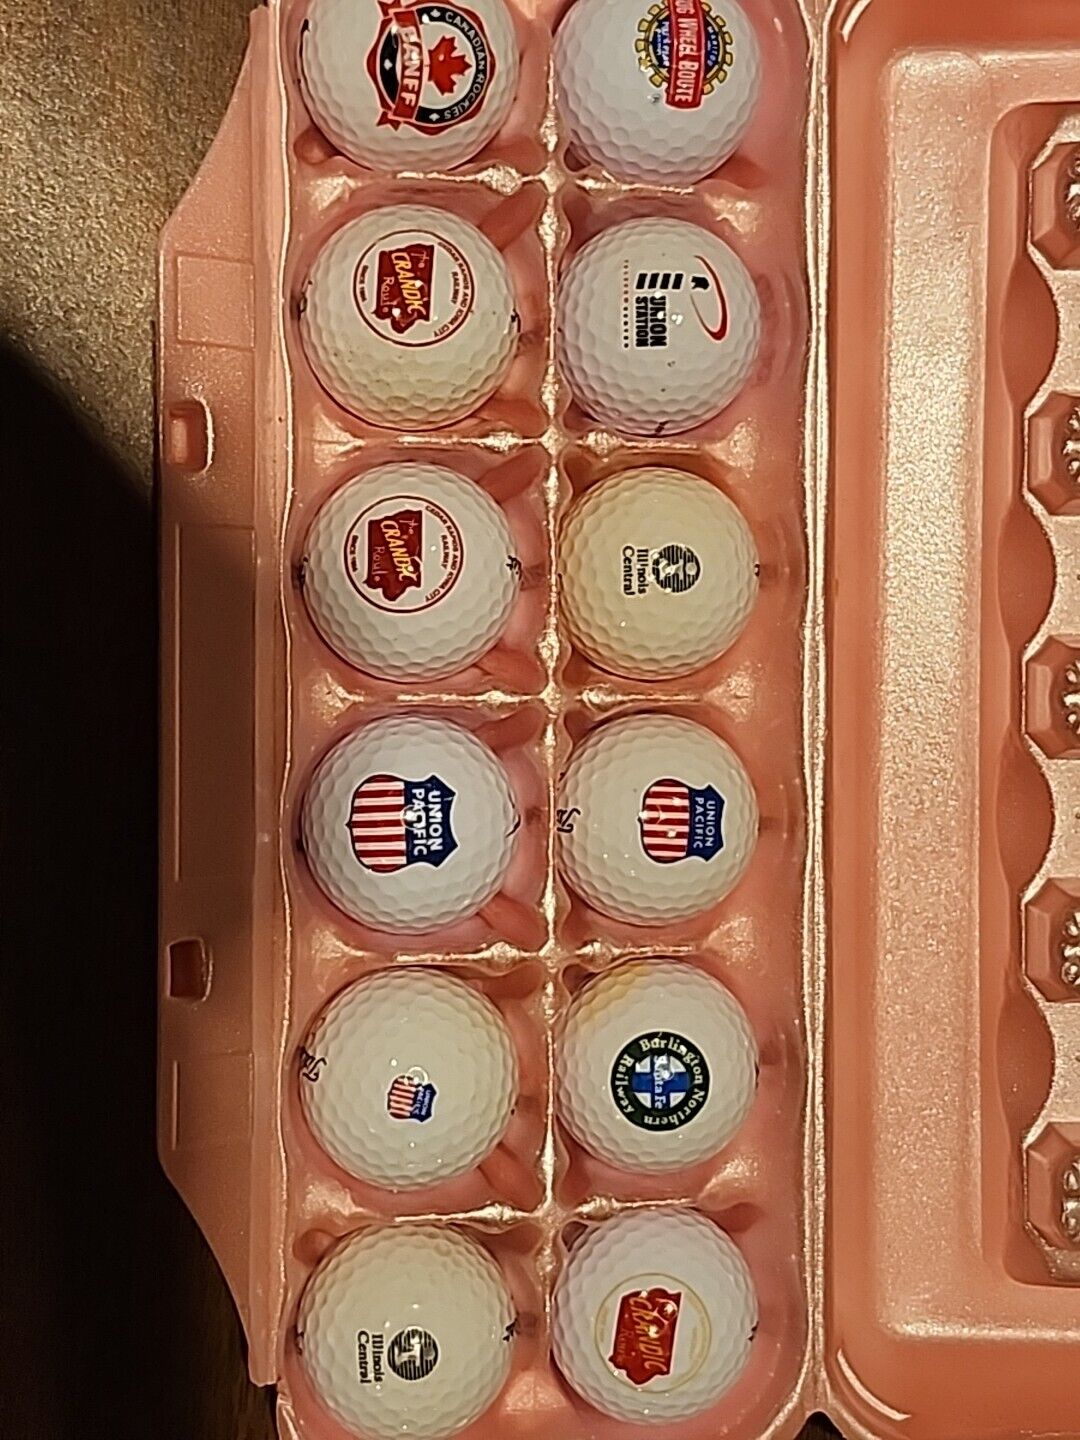 Railroad logo golf balls collection